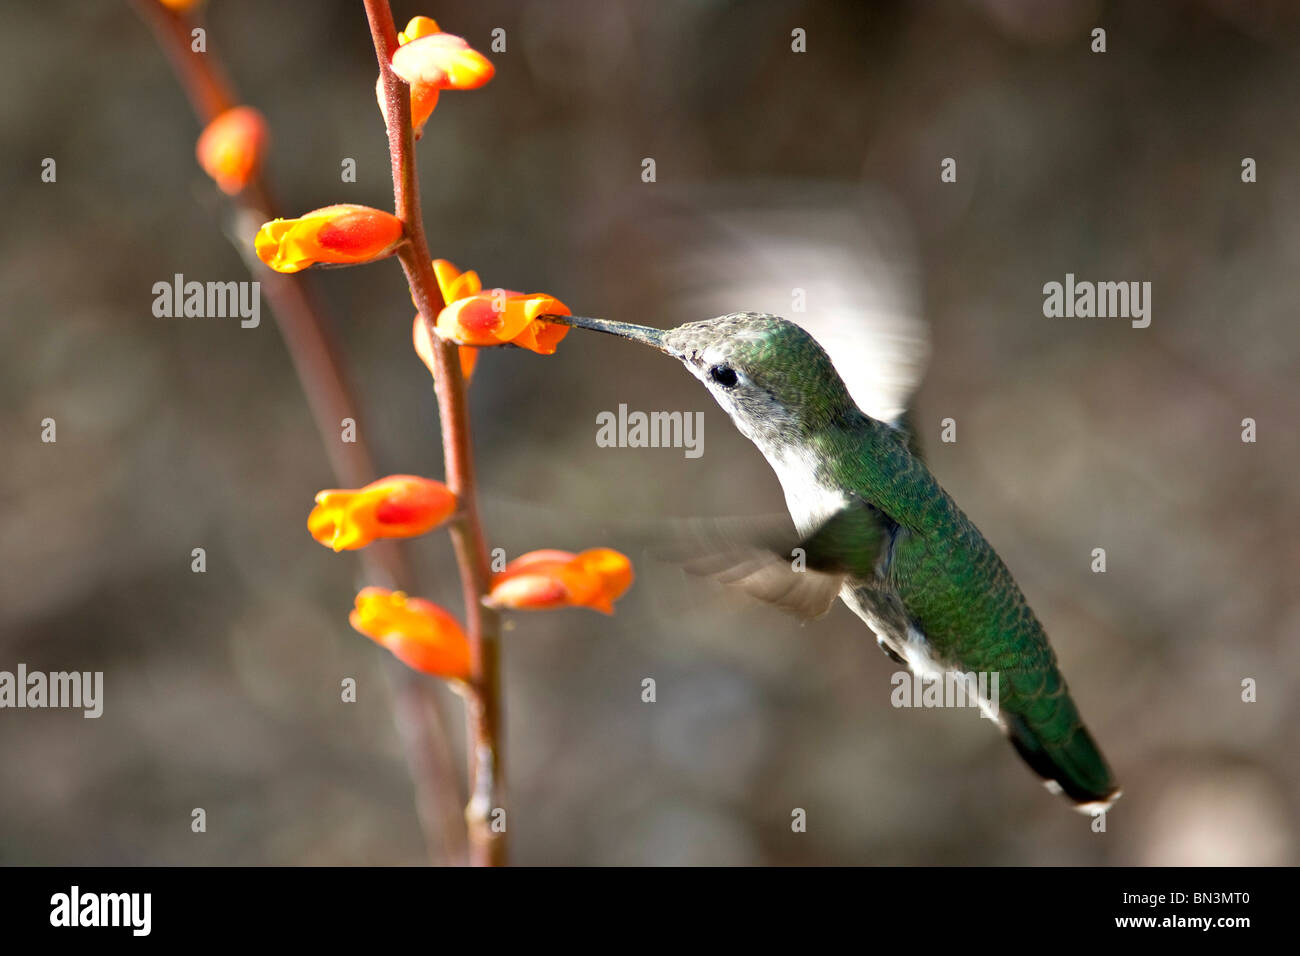 Hummingbird feeding, Desert Botanical Garden, Phoenix, Arizona, USA, close-up Stock Photo